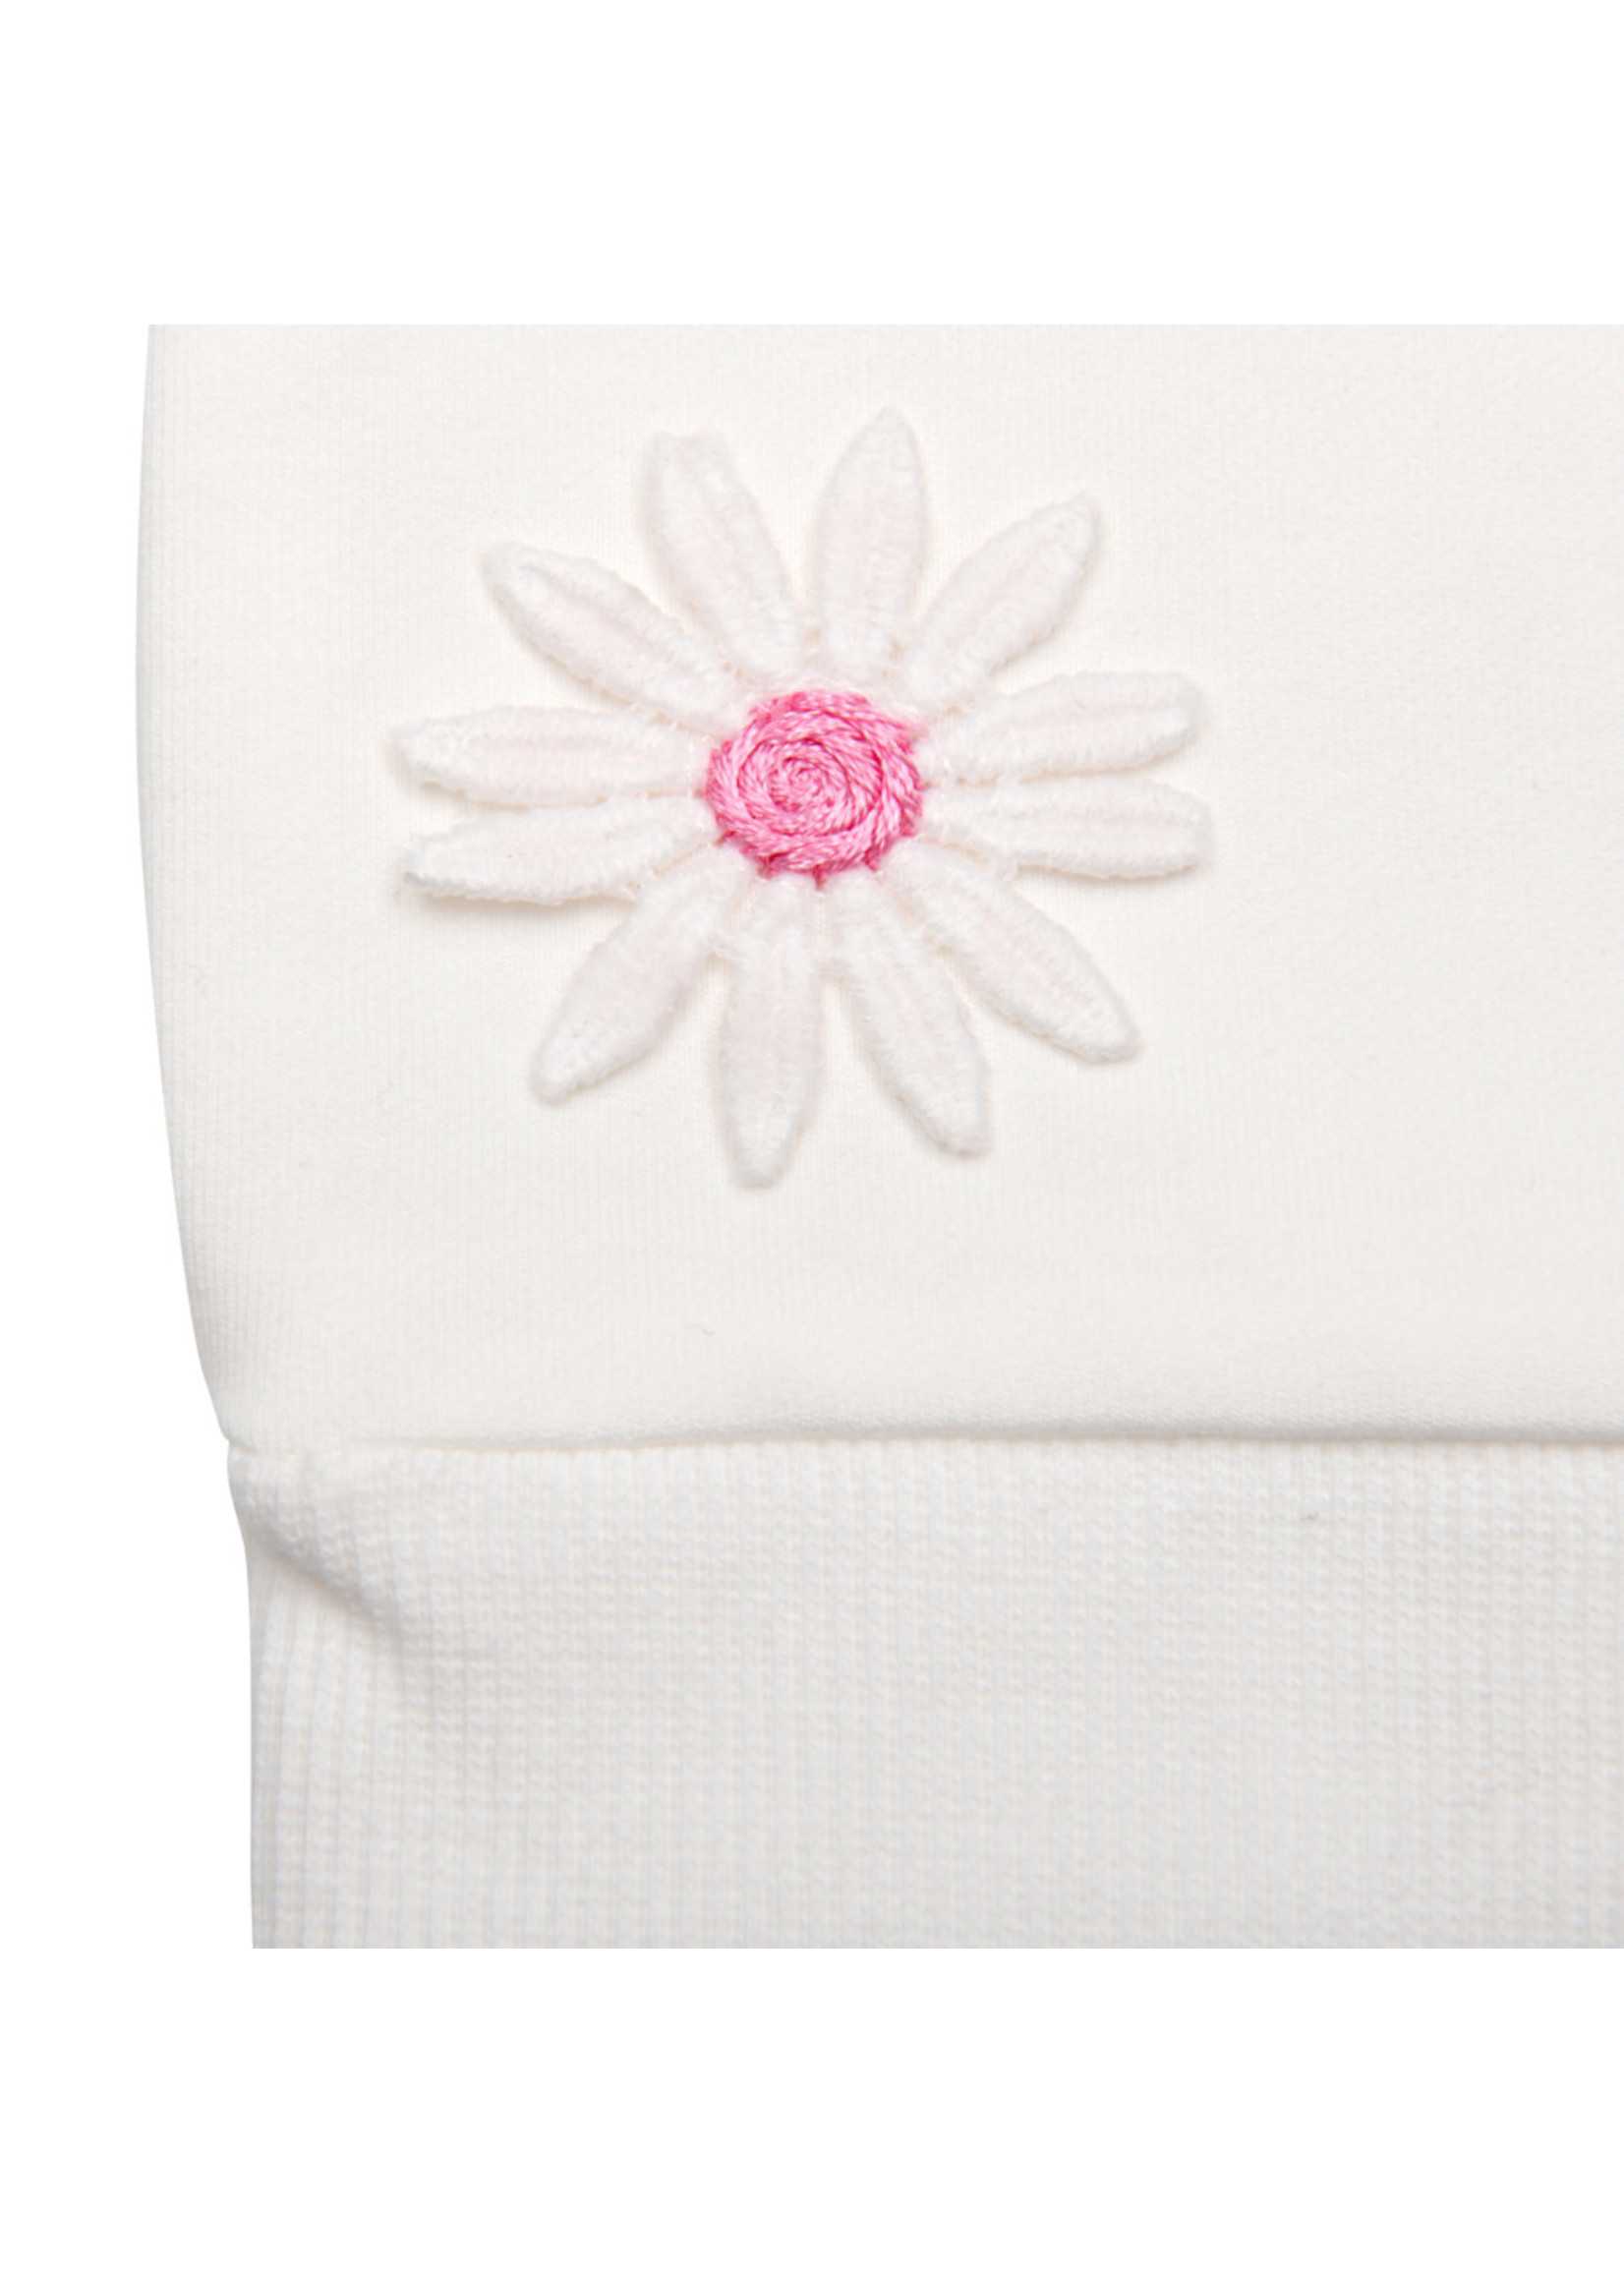 Natini Natini sweater white/fuschia flowers - 2400 11303 0005